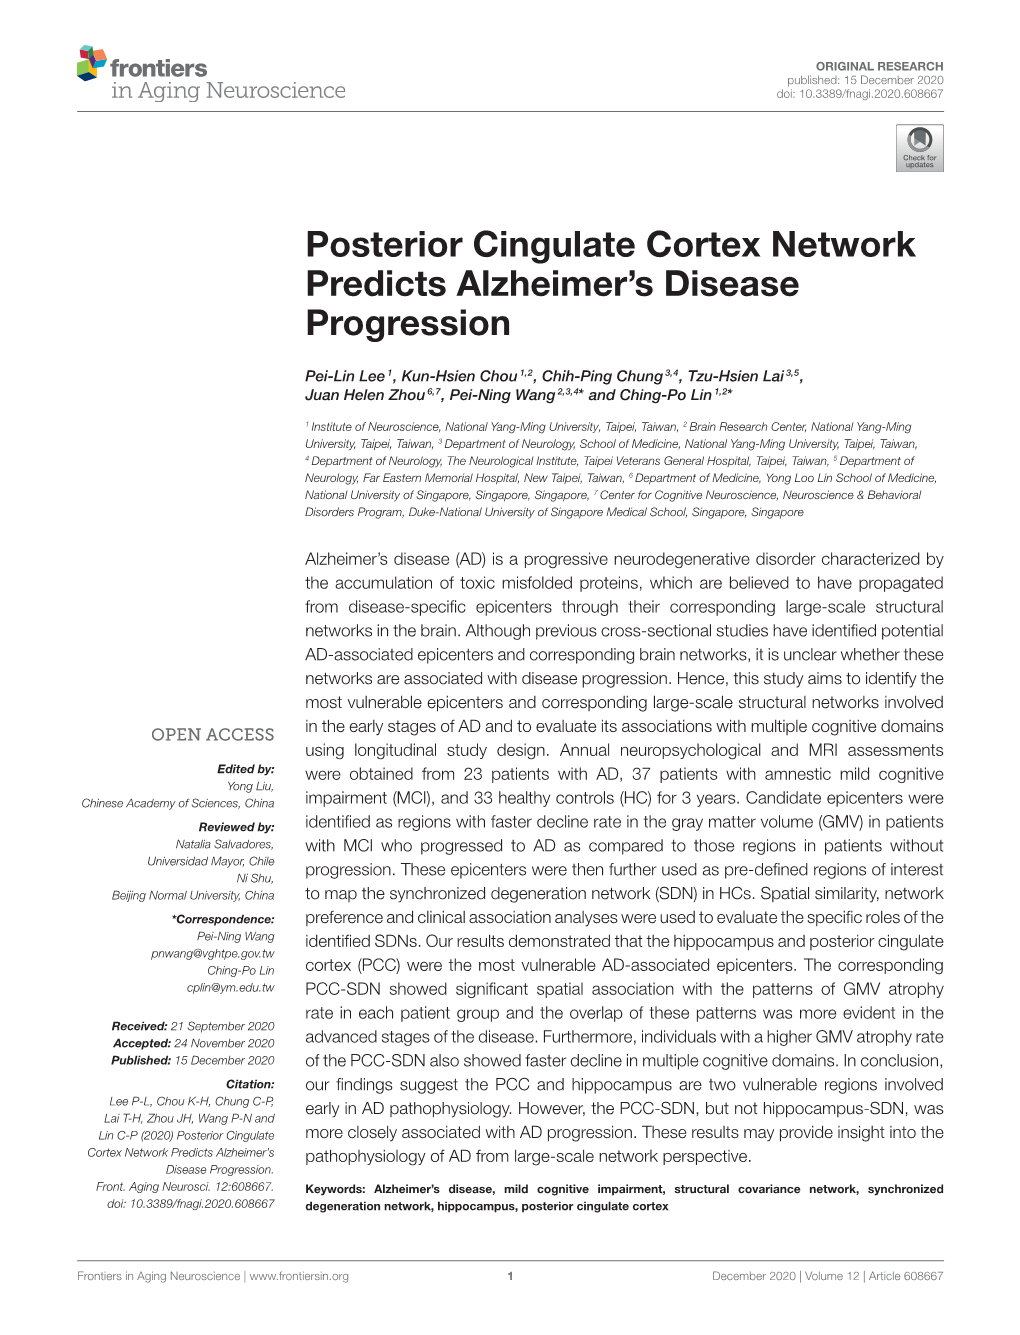 Posterior Cingulate Cortex Network Predicts Alzheimer's Disease Progression